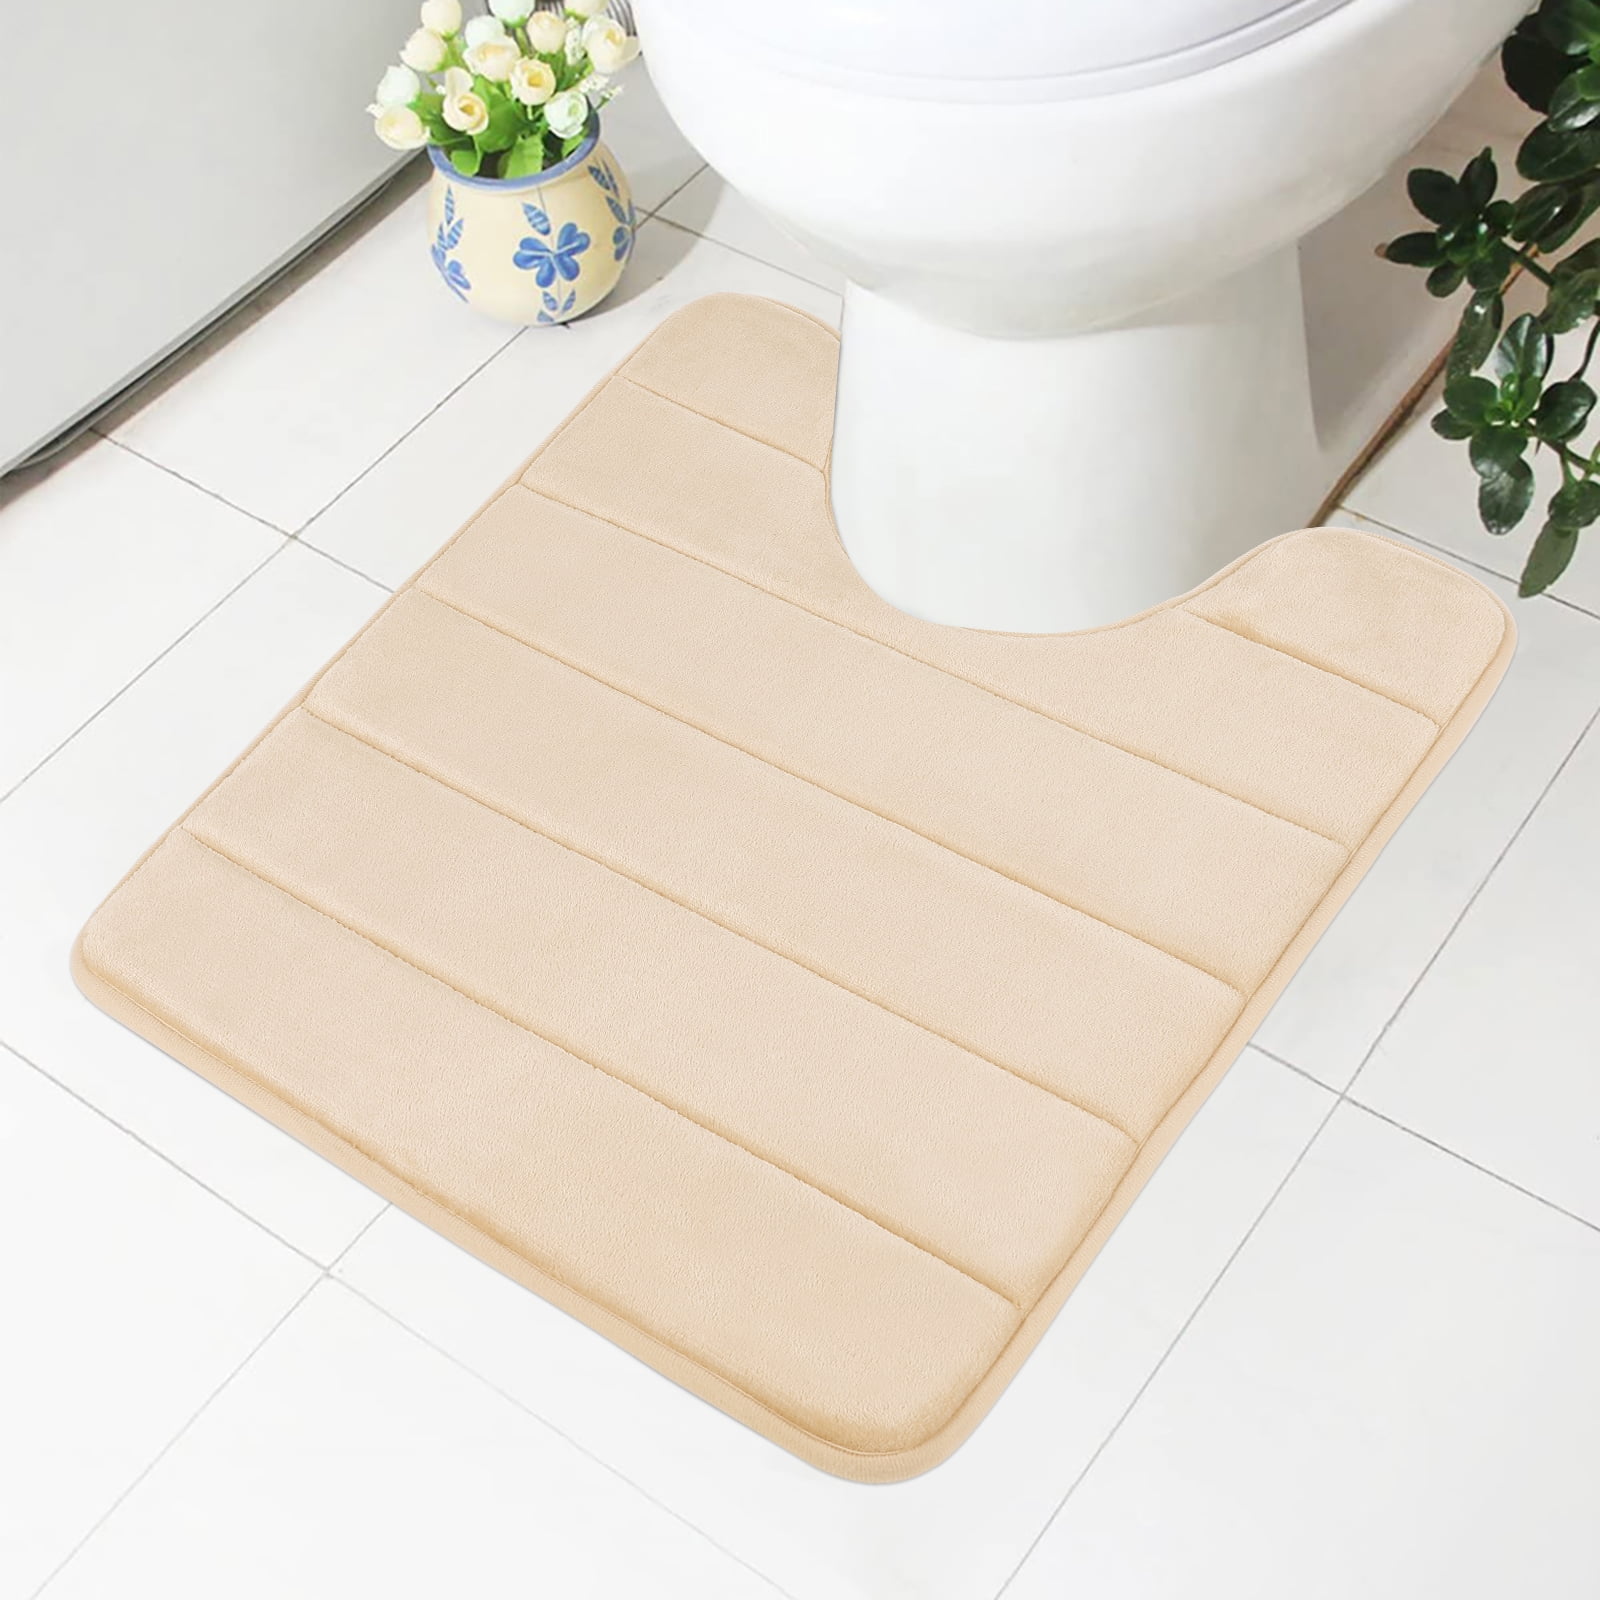 Yafa Home Fashion 3 Piece Rectangular Color Variant Memory Foam Bathroom Rug Set Non-Slip PVC Backing, Size: 1 Contour Mat (20” x 20”) + 1 Bath Mat (20” x 32”) + 1 Lid